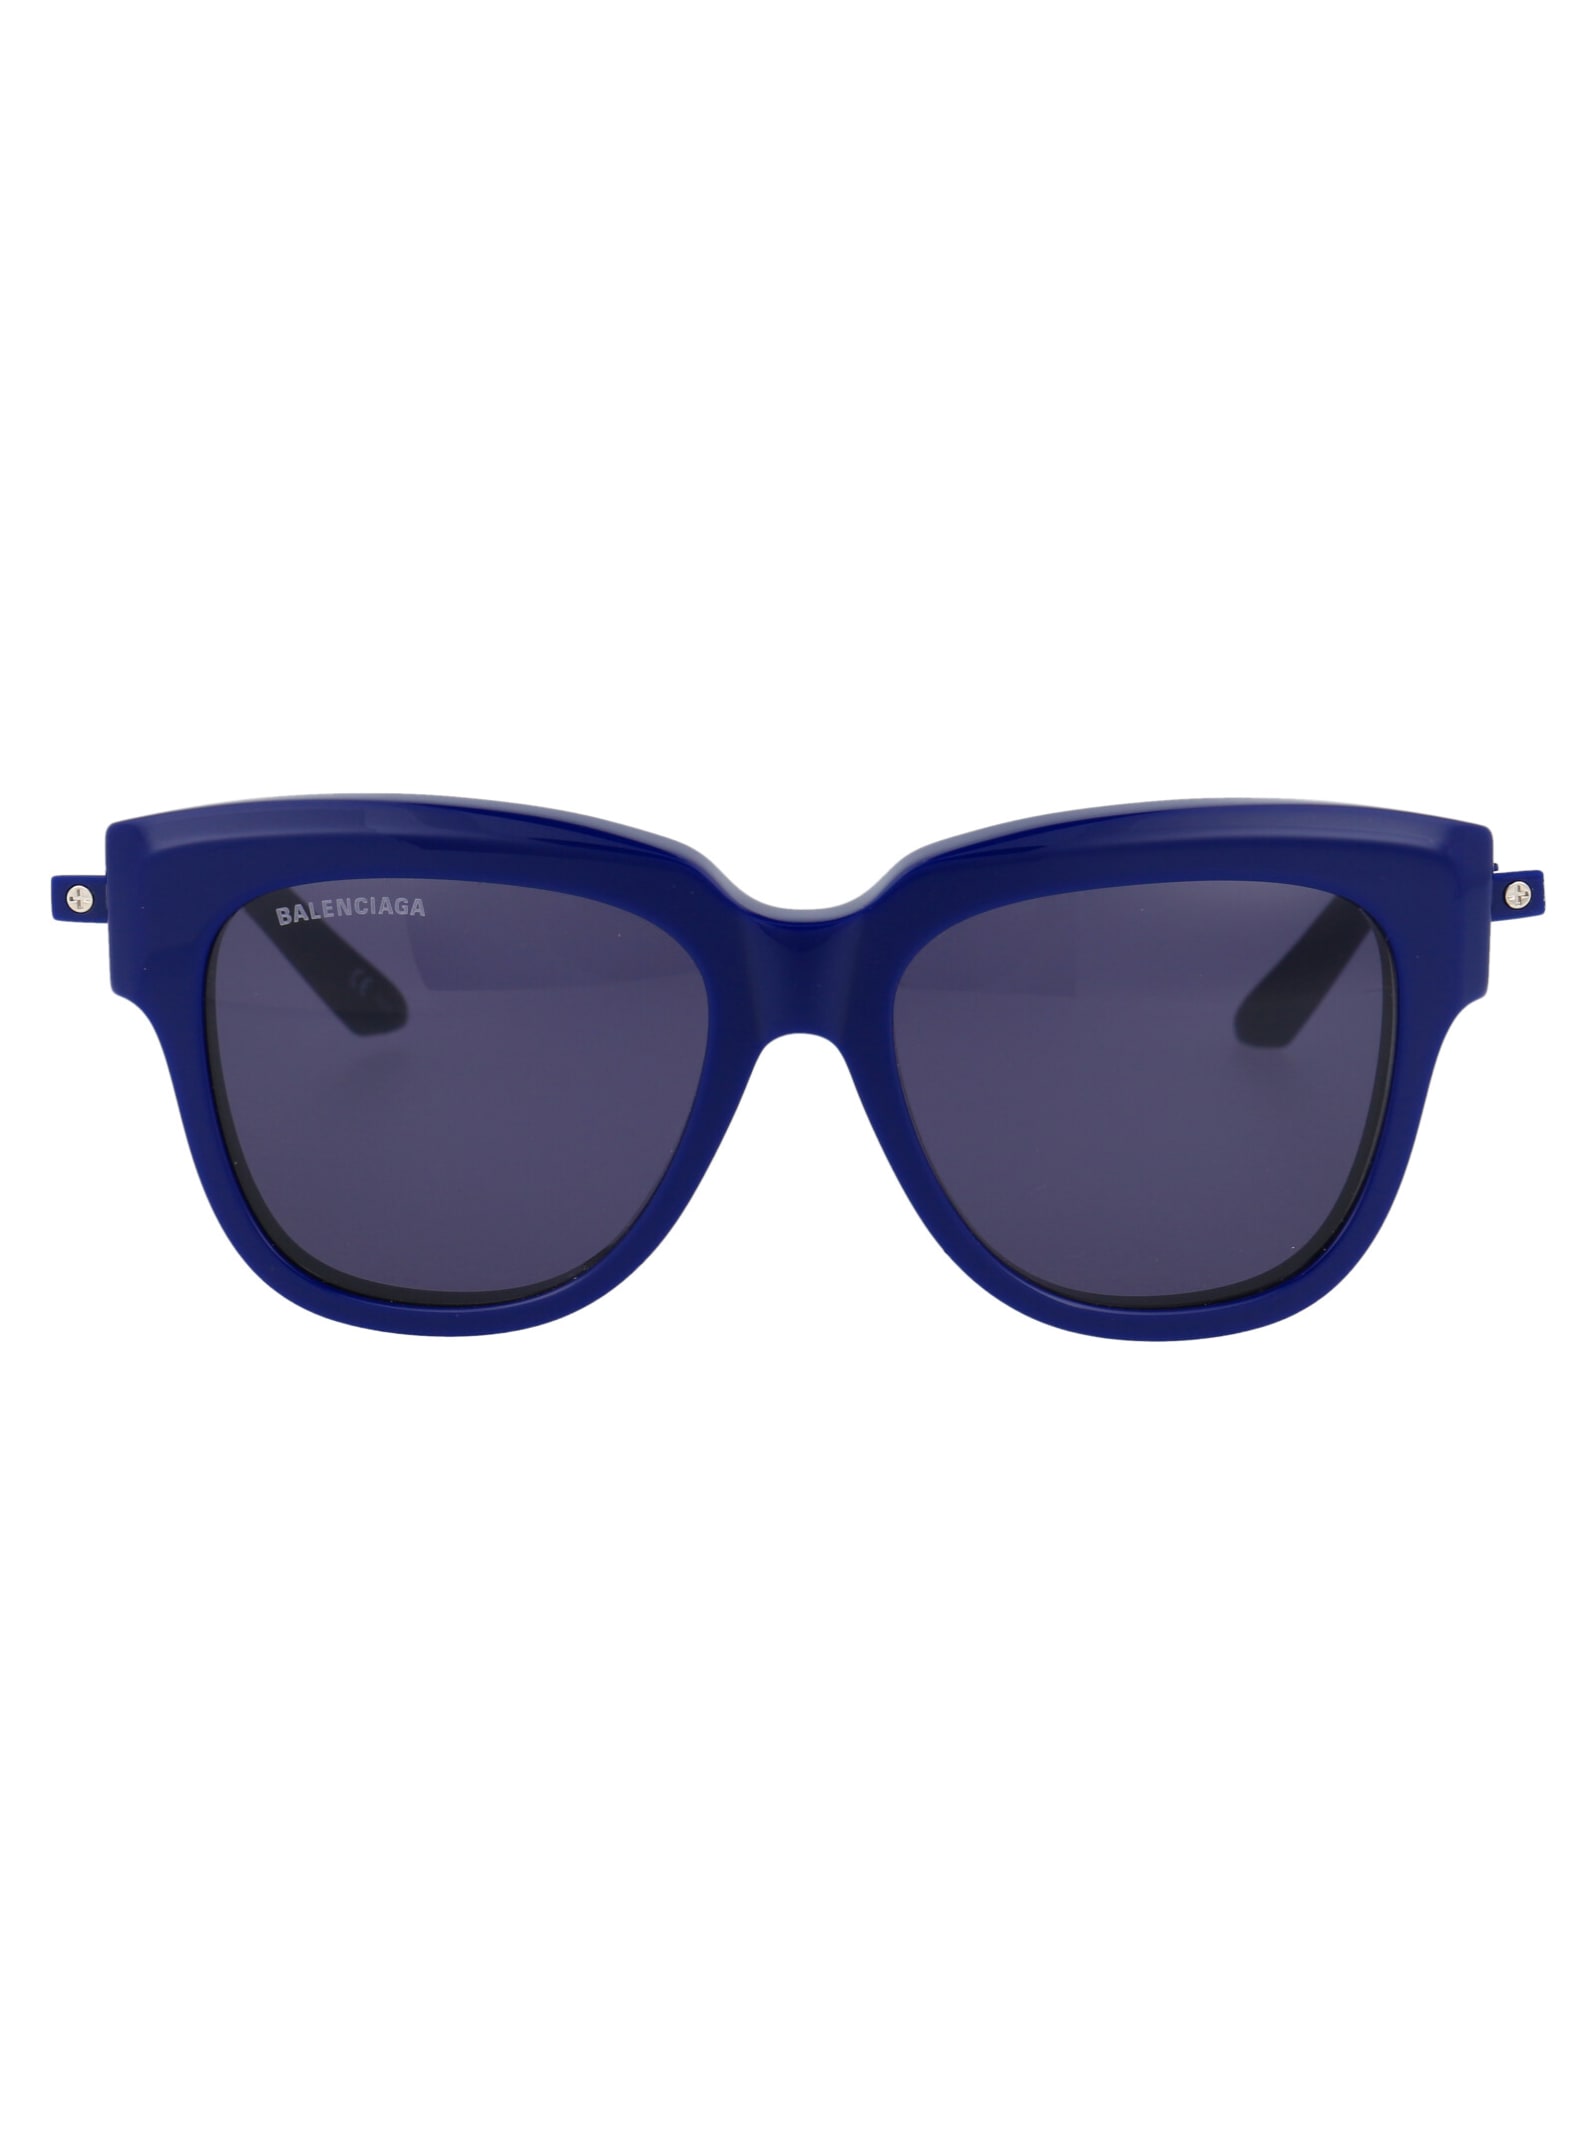 Balenciaga Eyewear Bb0160s Sunglasses